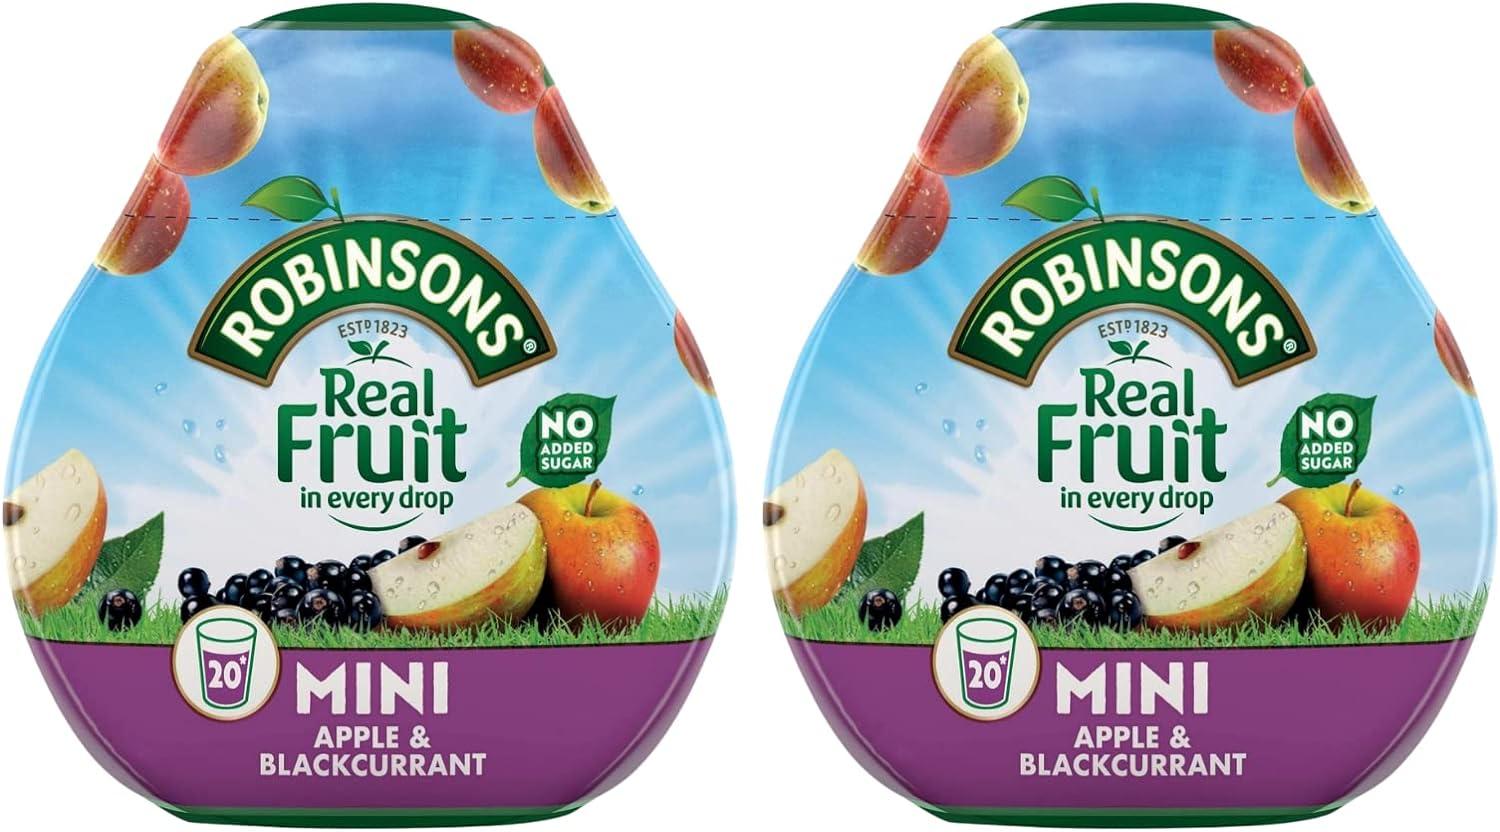 Robinsons Mini 2-Flavour Bundle - Apple & Blackcurrant and Orange